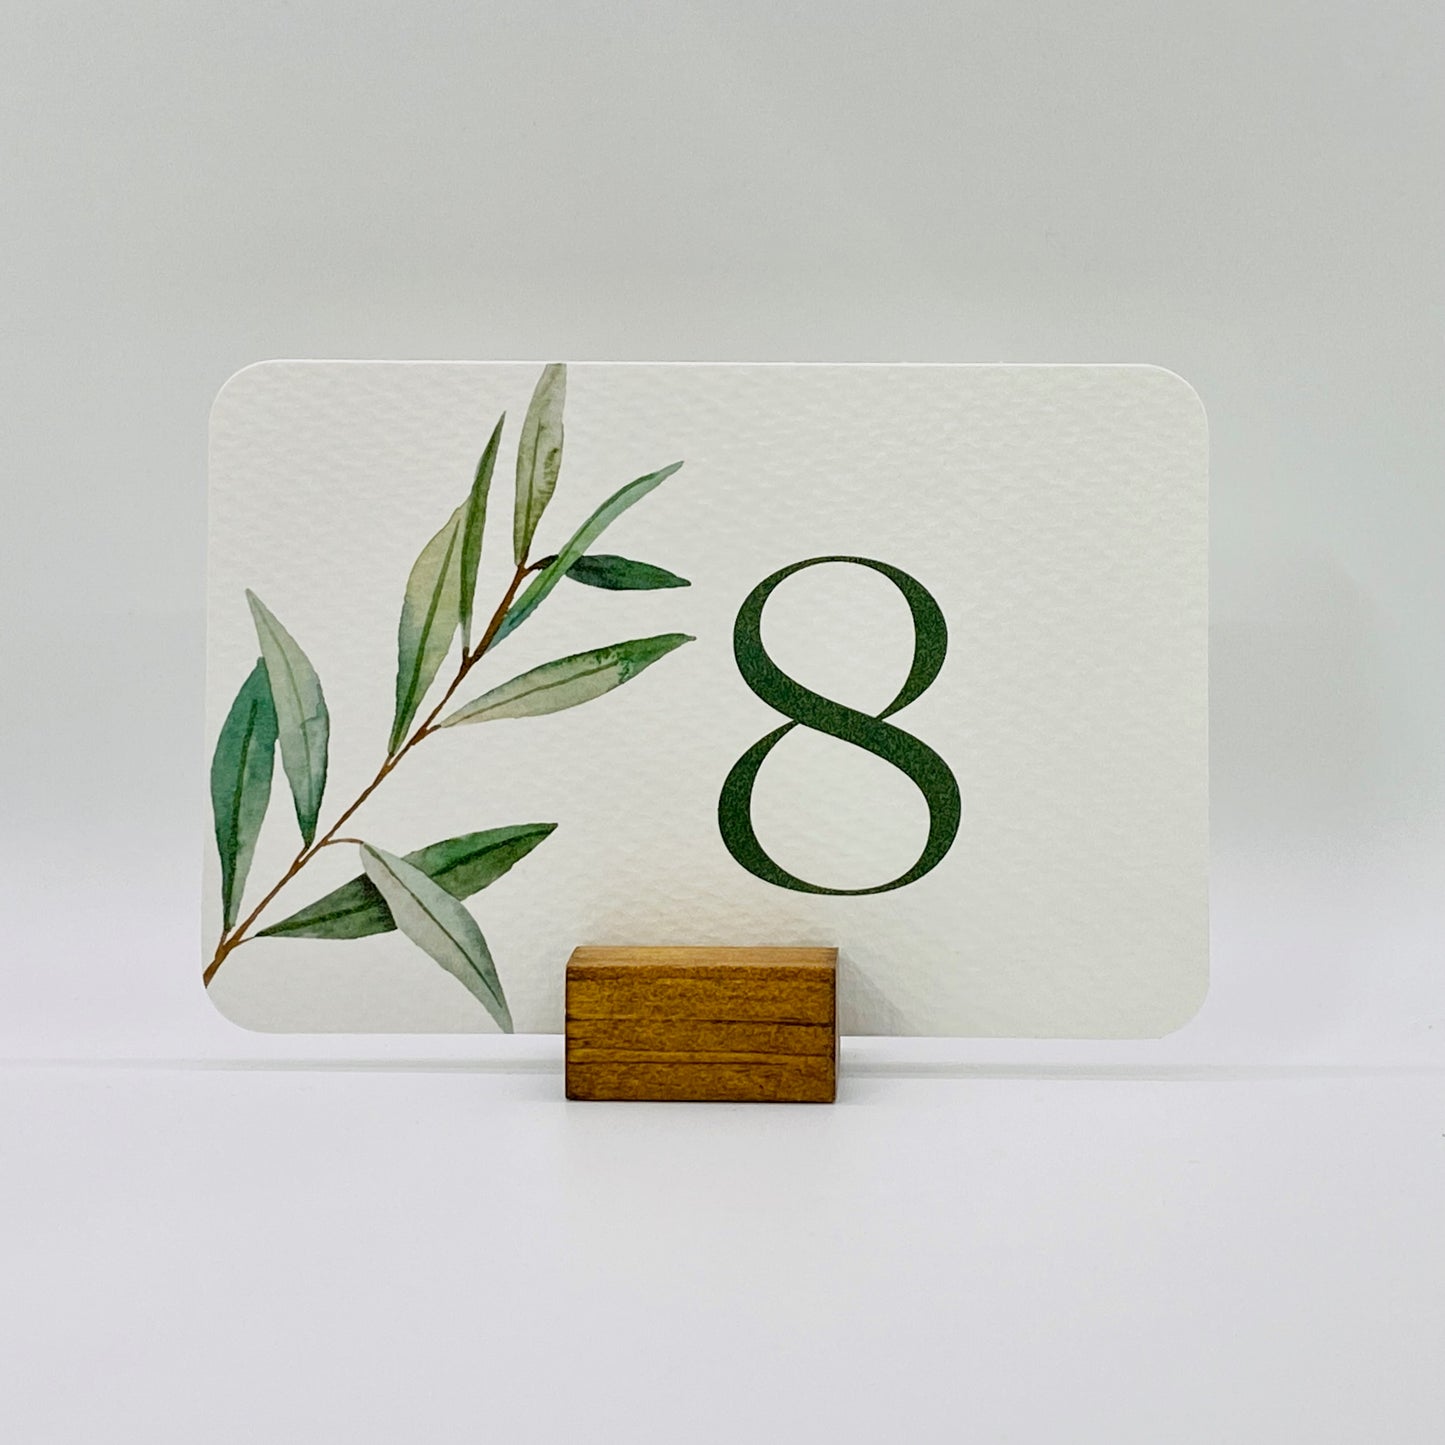 Olive Sprig Table Number - Gallery360 Designs